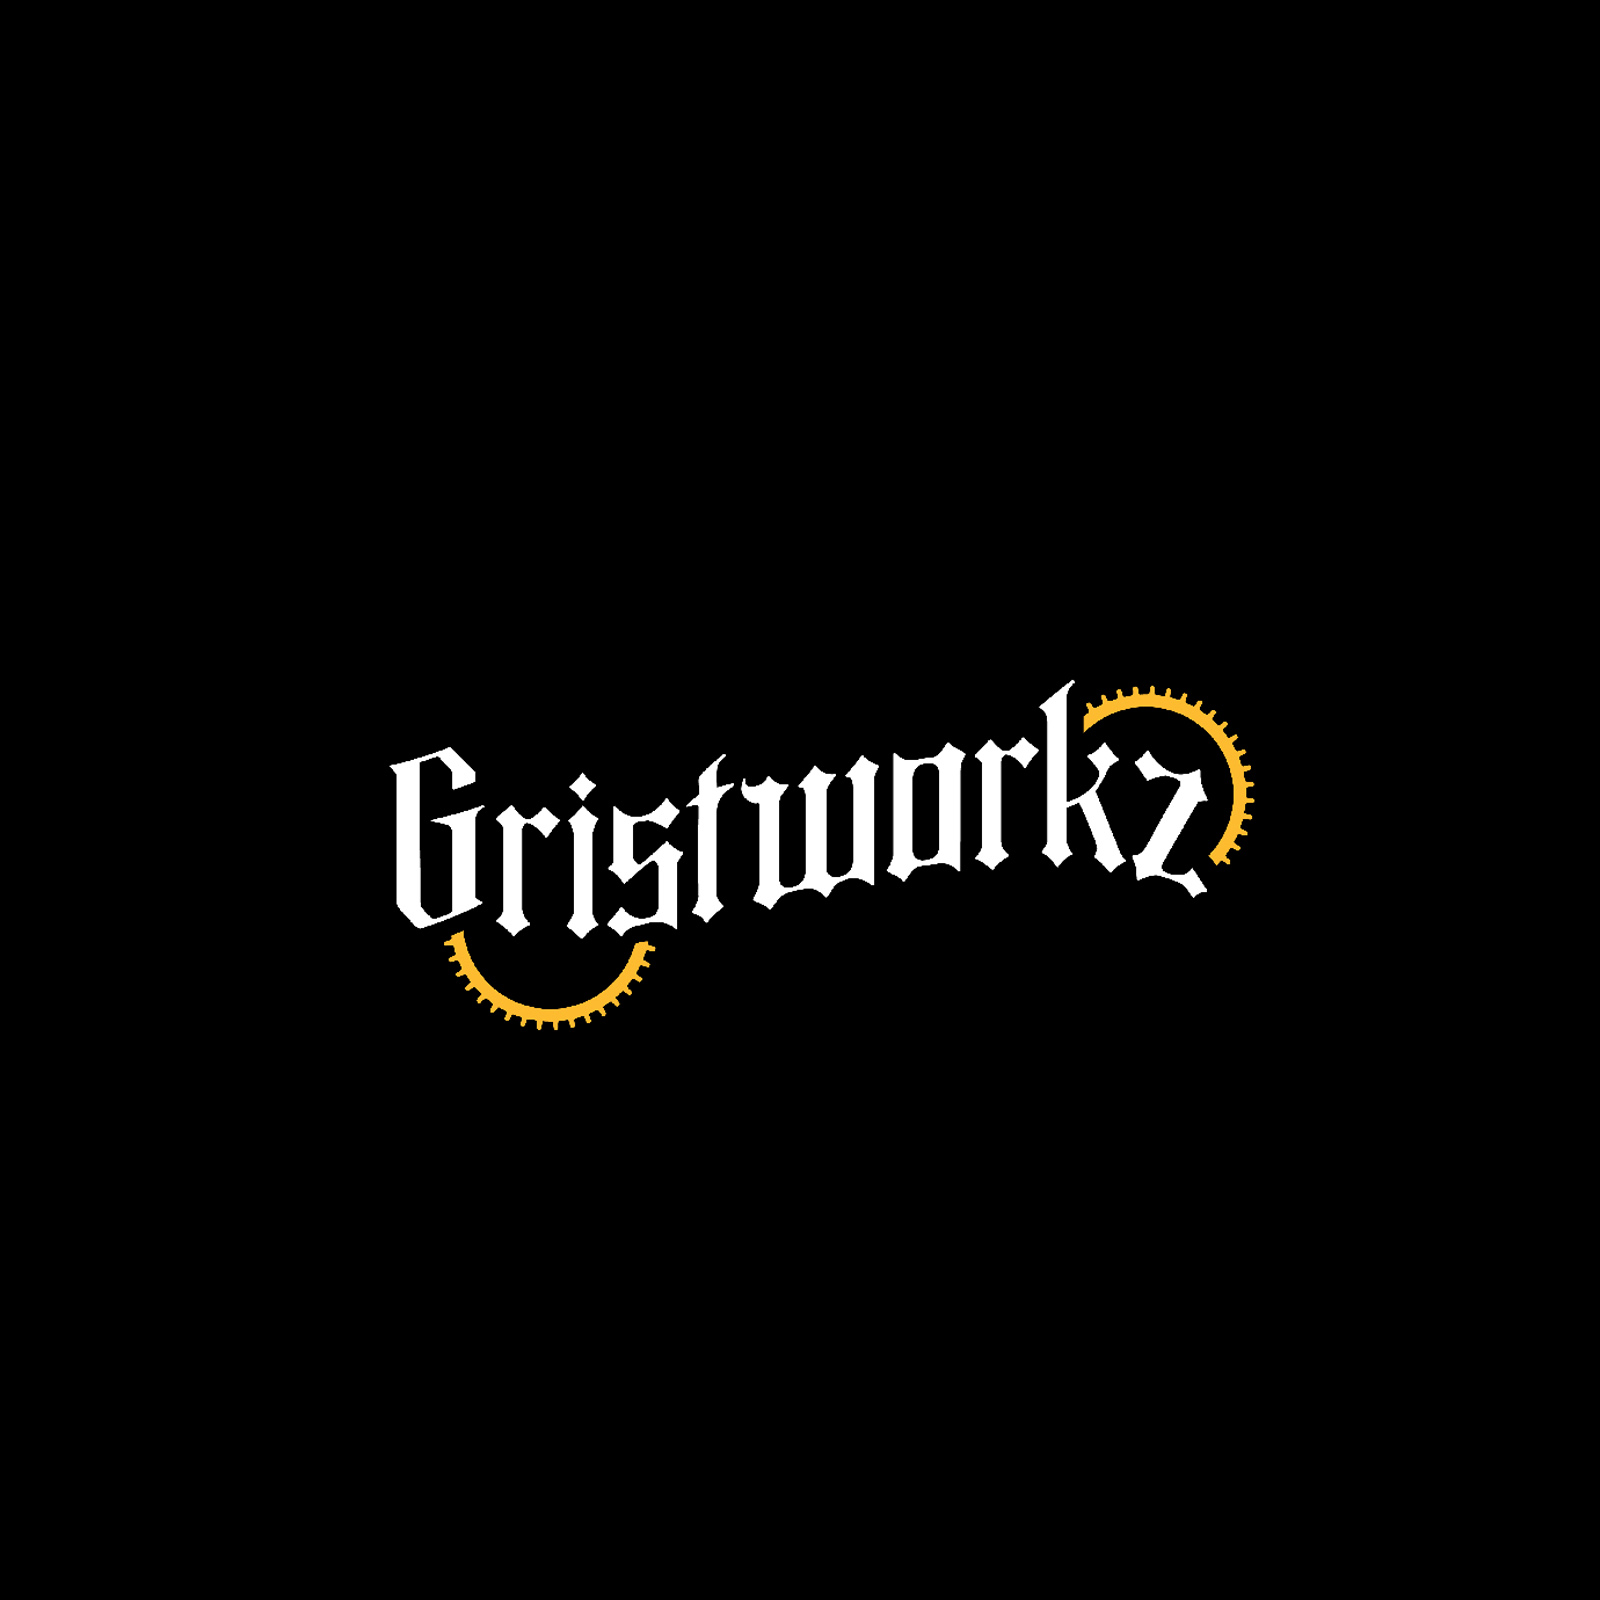 Beer-Chronicle-Houston-list-of-houston-breweries-gristworkz-logo